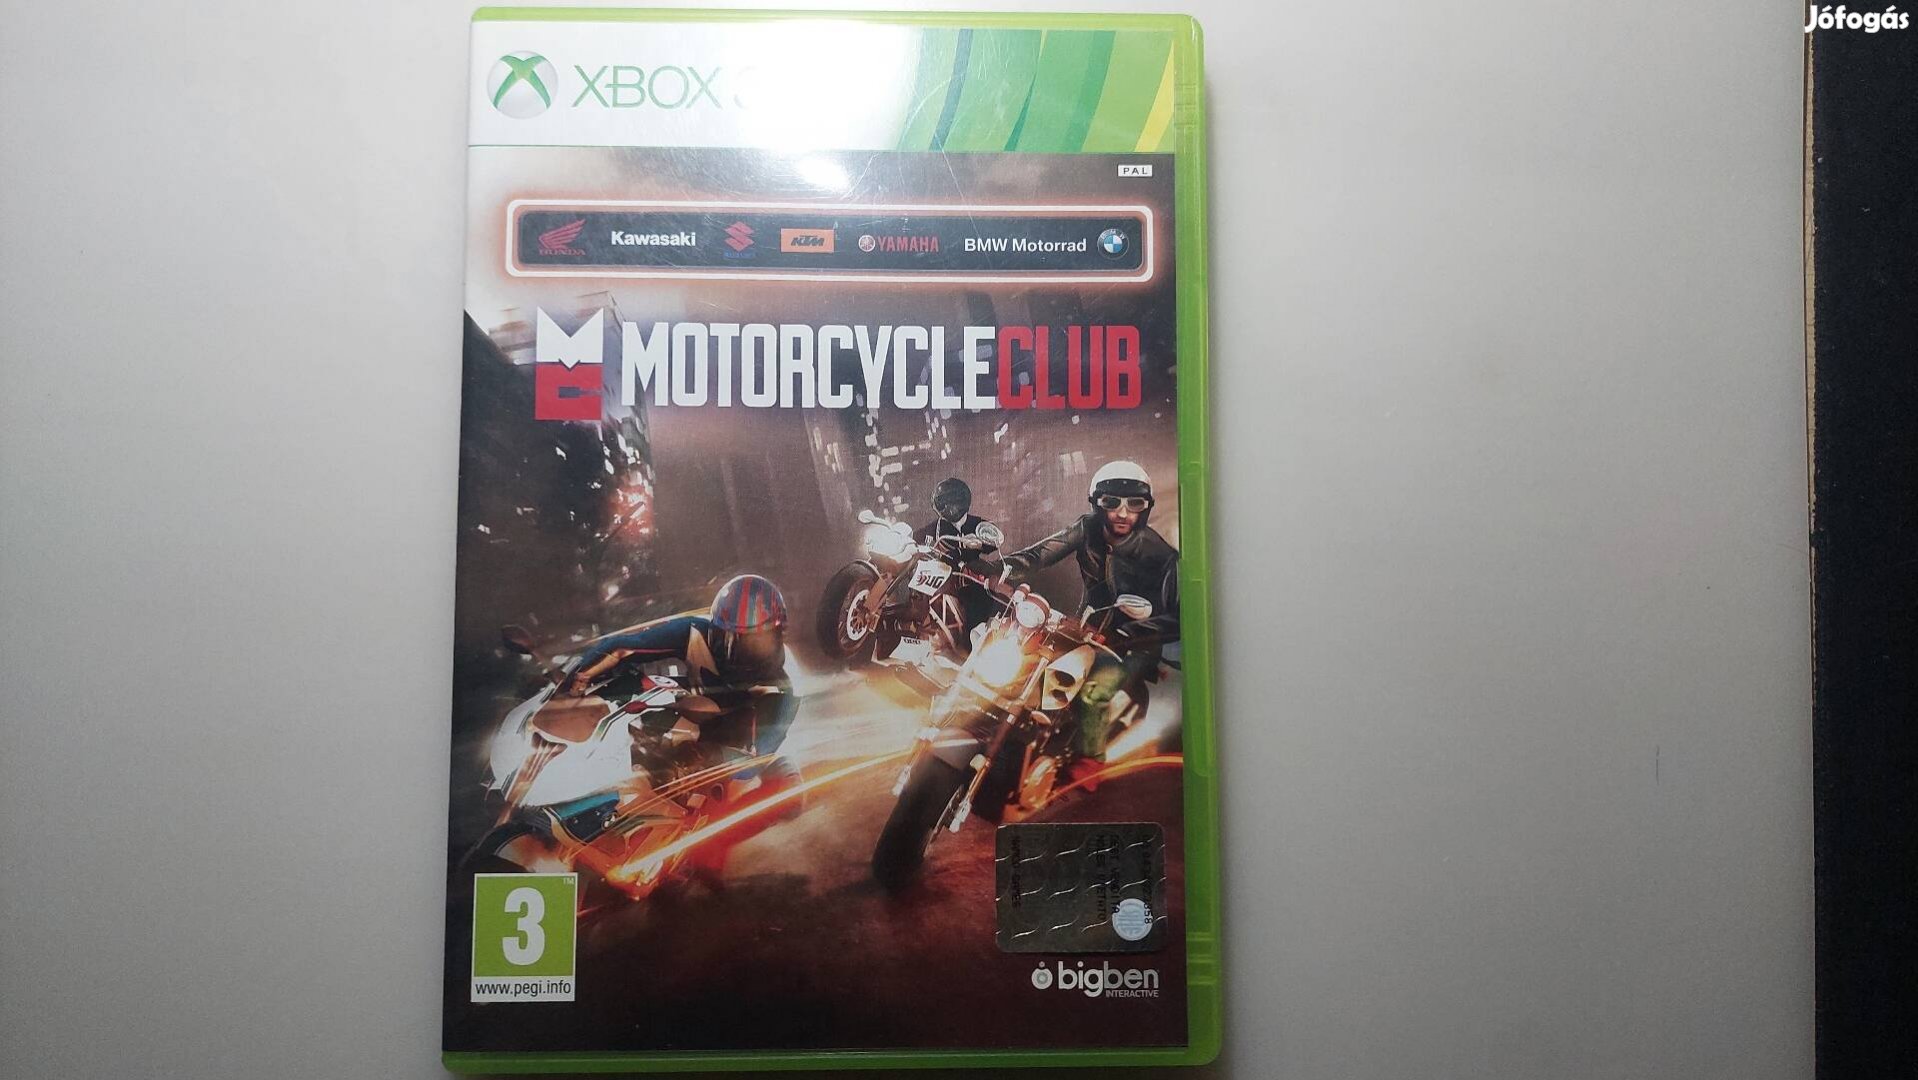 Xbox 360 Motorcycle Club